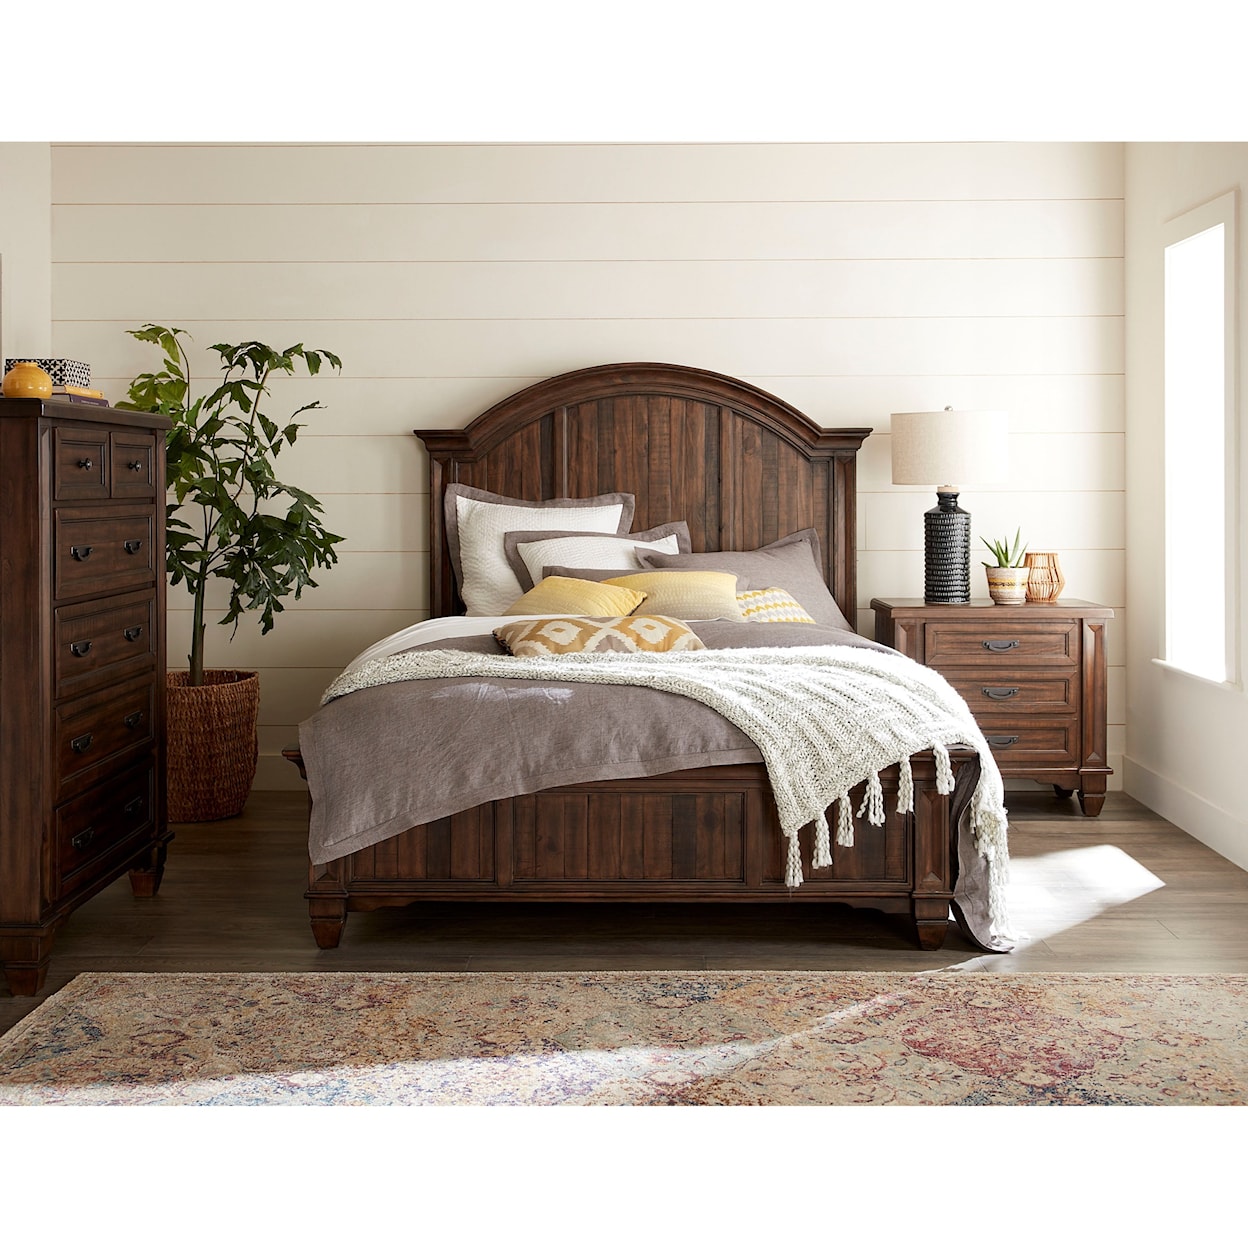 Modus International Colston King Solid Wood Storage Bed